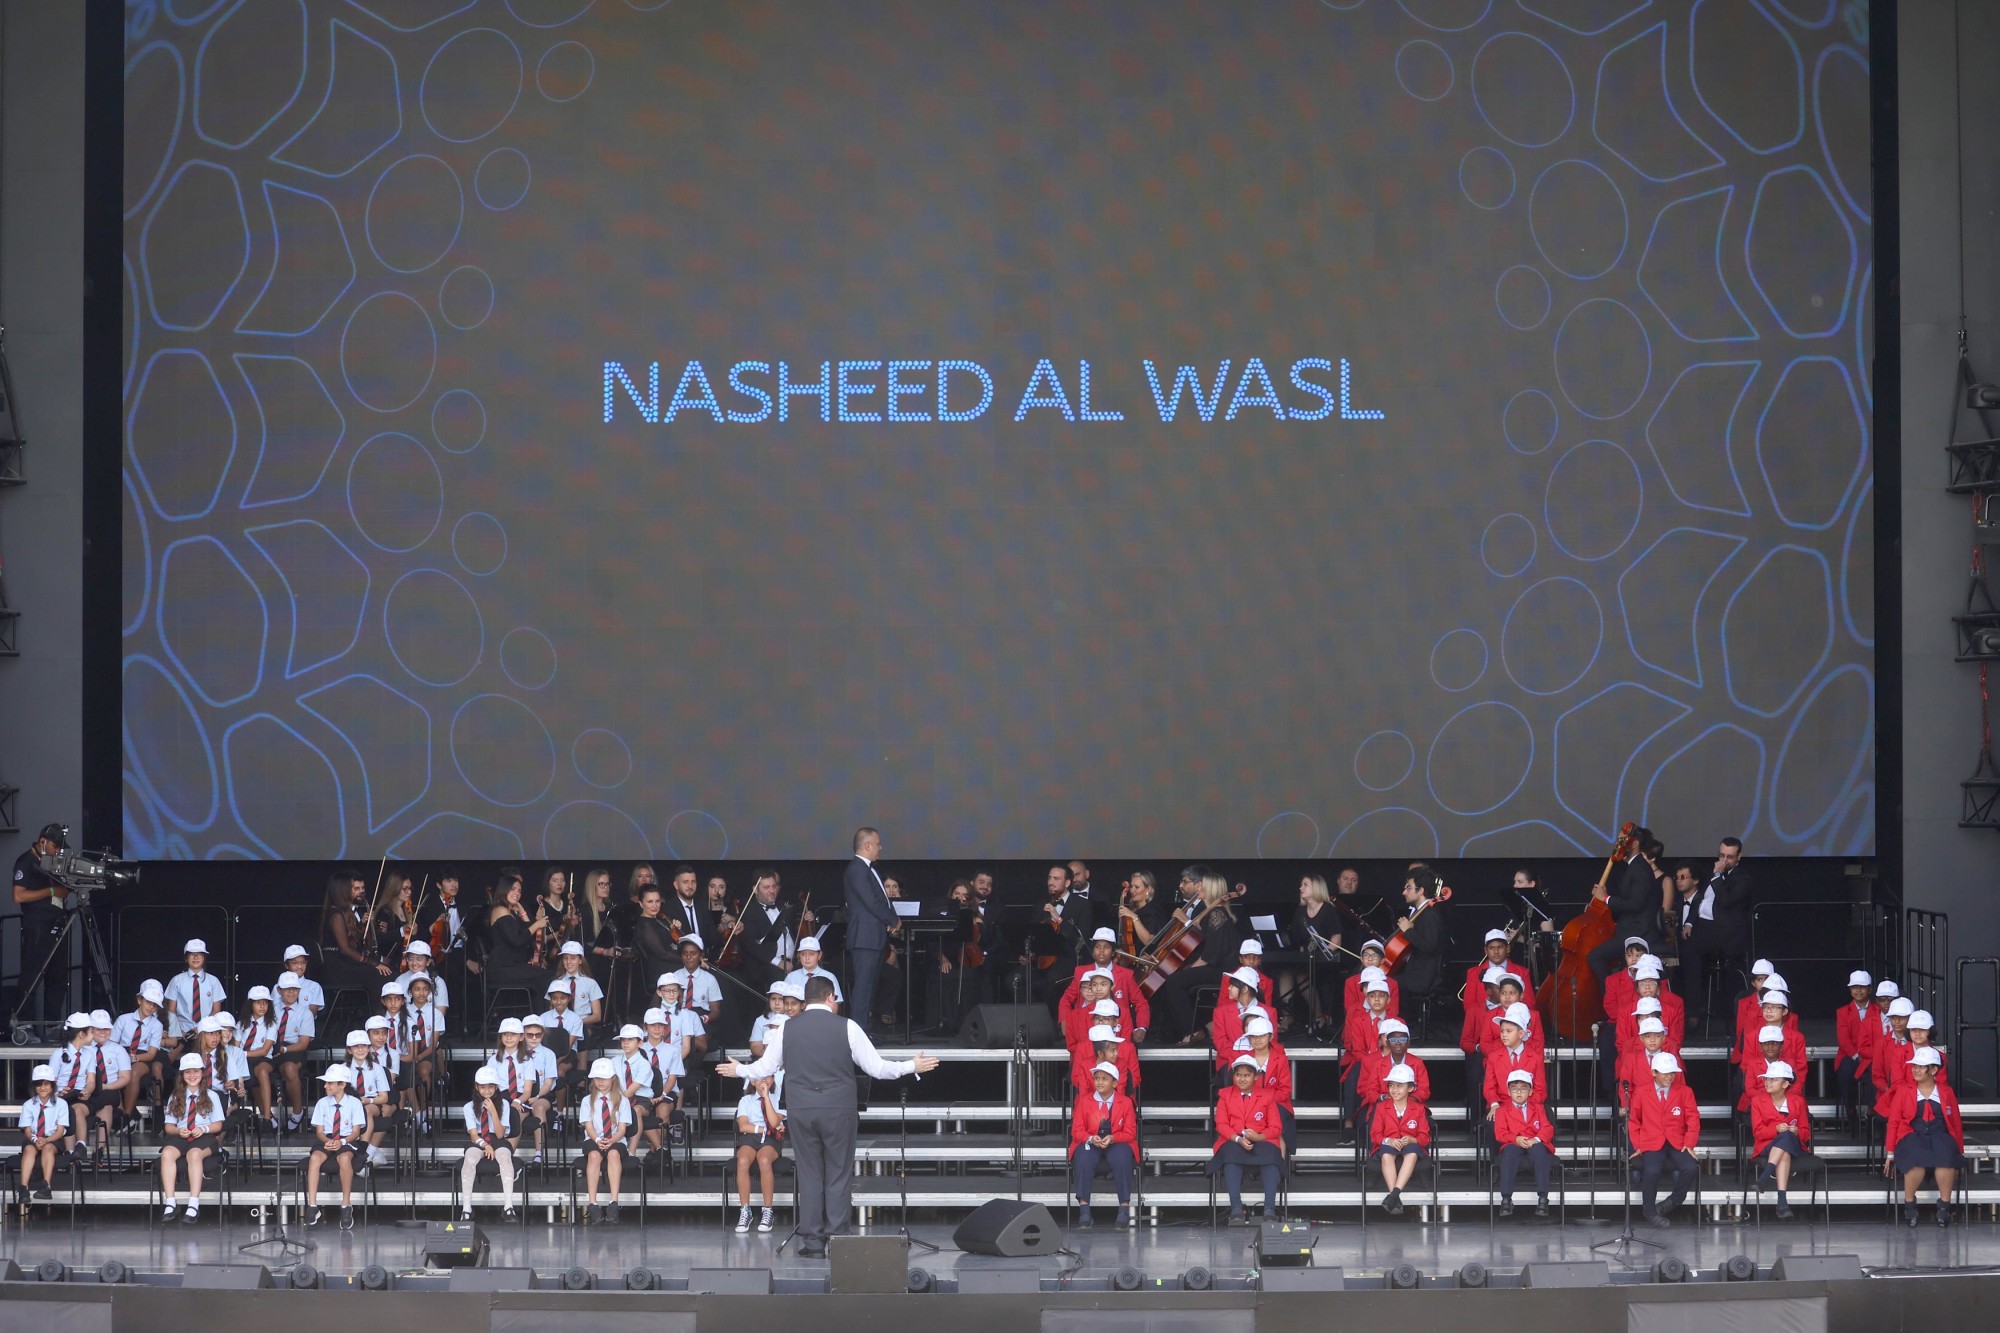 School choirs perform ‘Nasheed Al Wasl’ at Jubilee Stage m67156